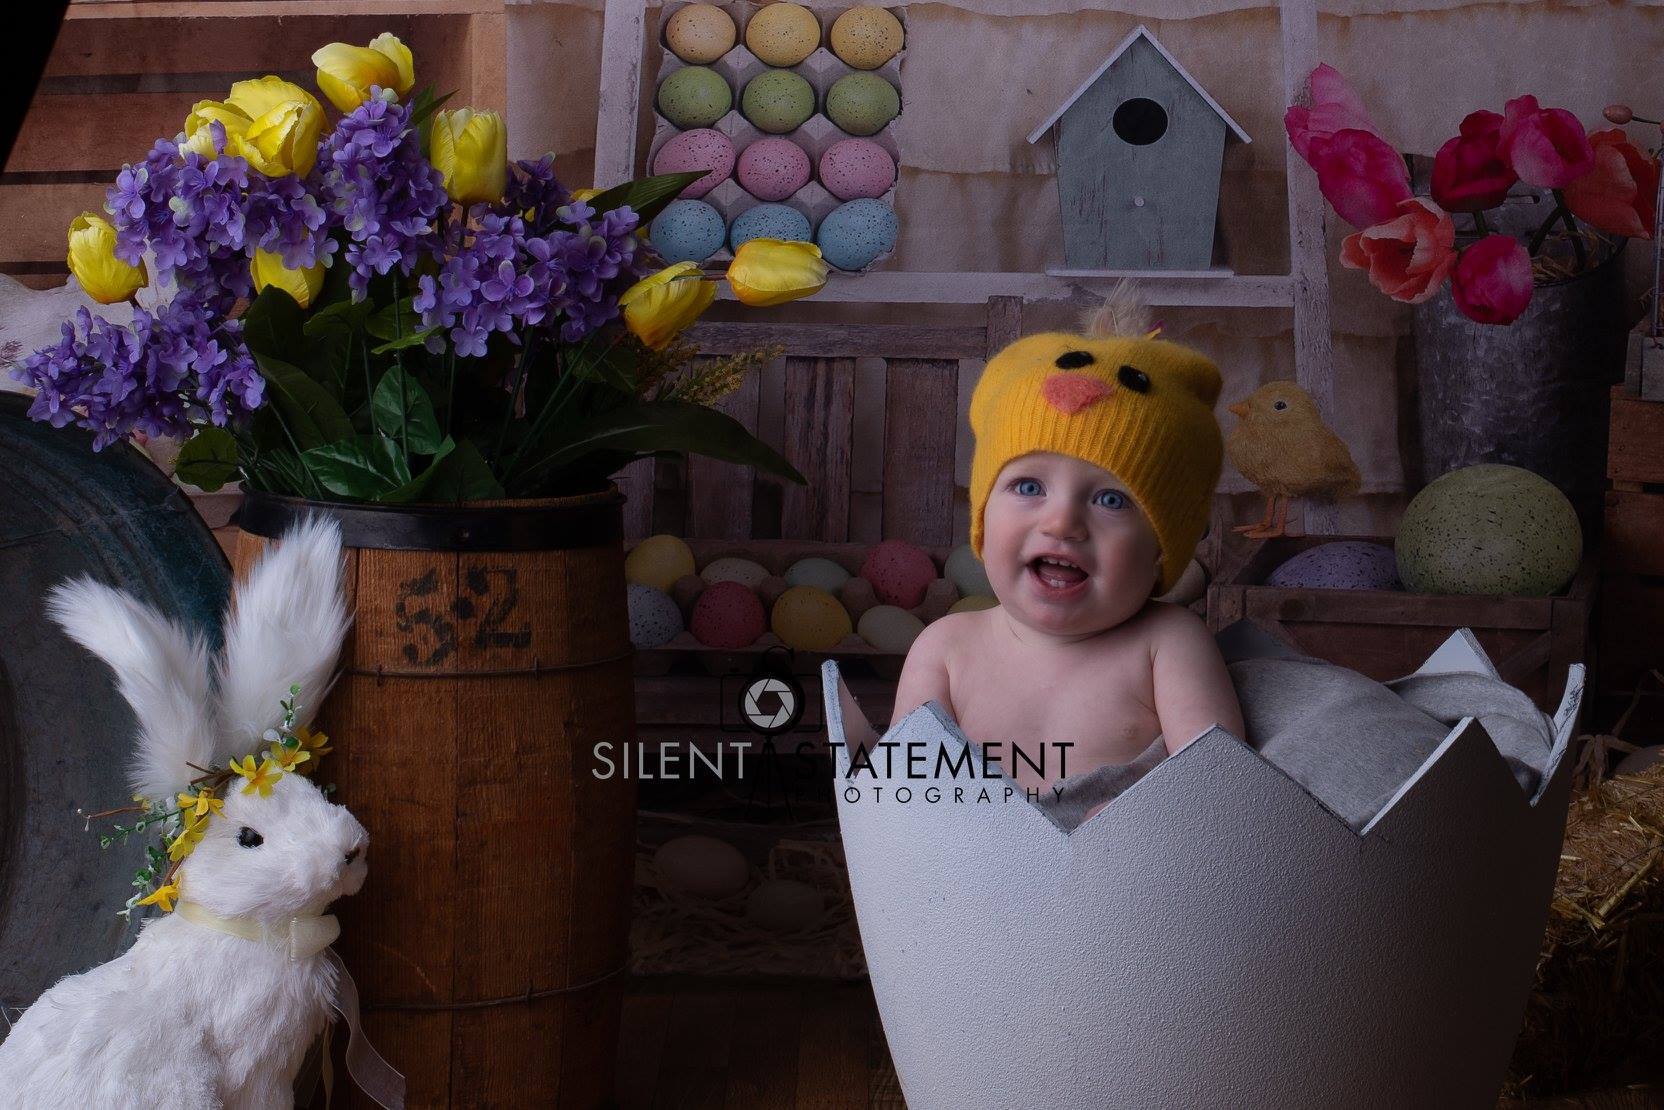 Katebackdrop£ºKate Colorful Eggs Happy Easter Backdrop for Photography